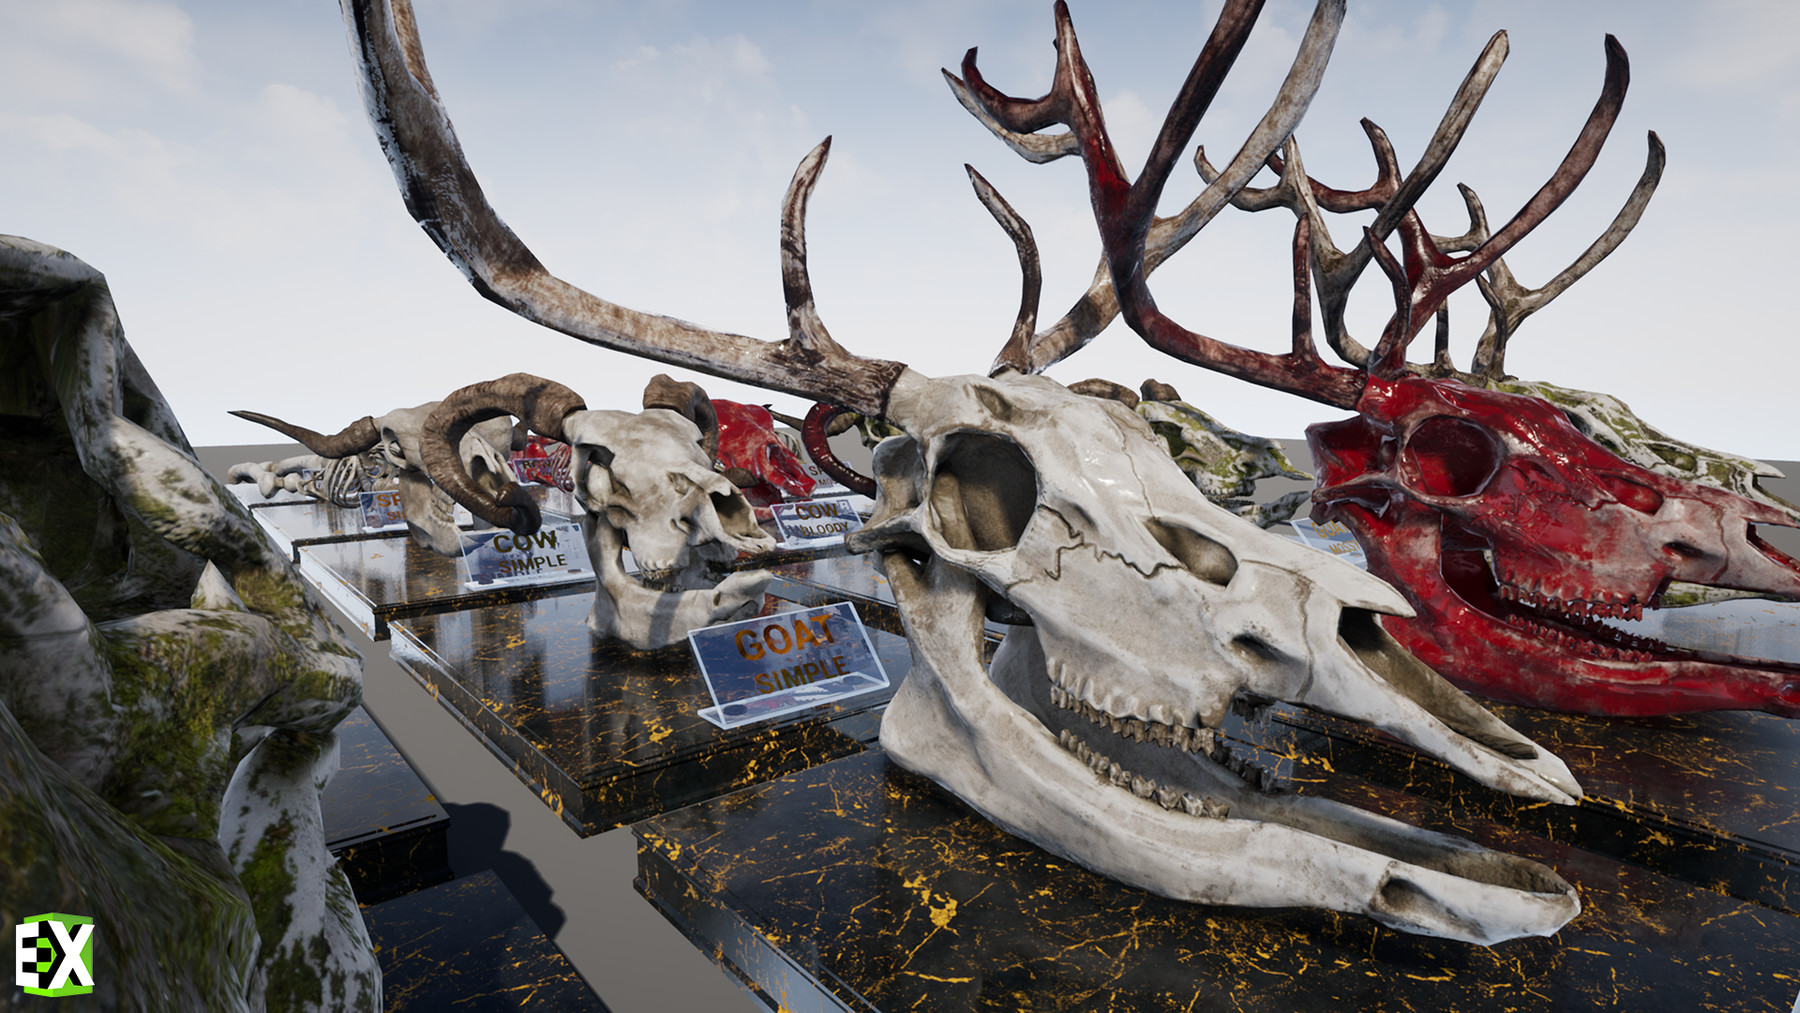 skull and bones gameplay